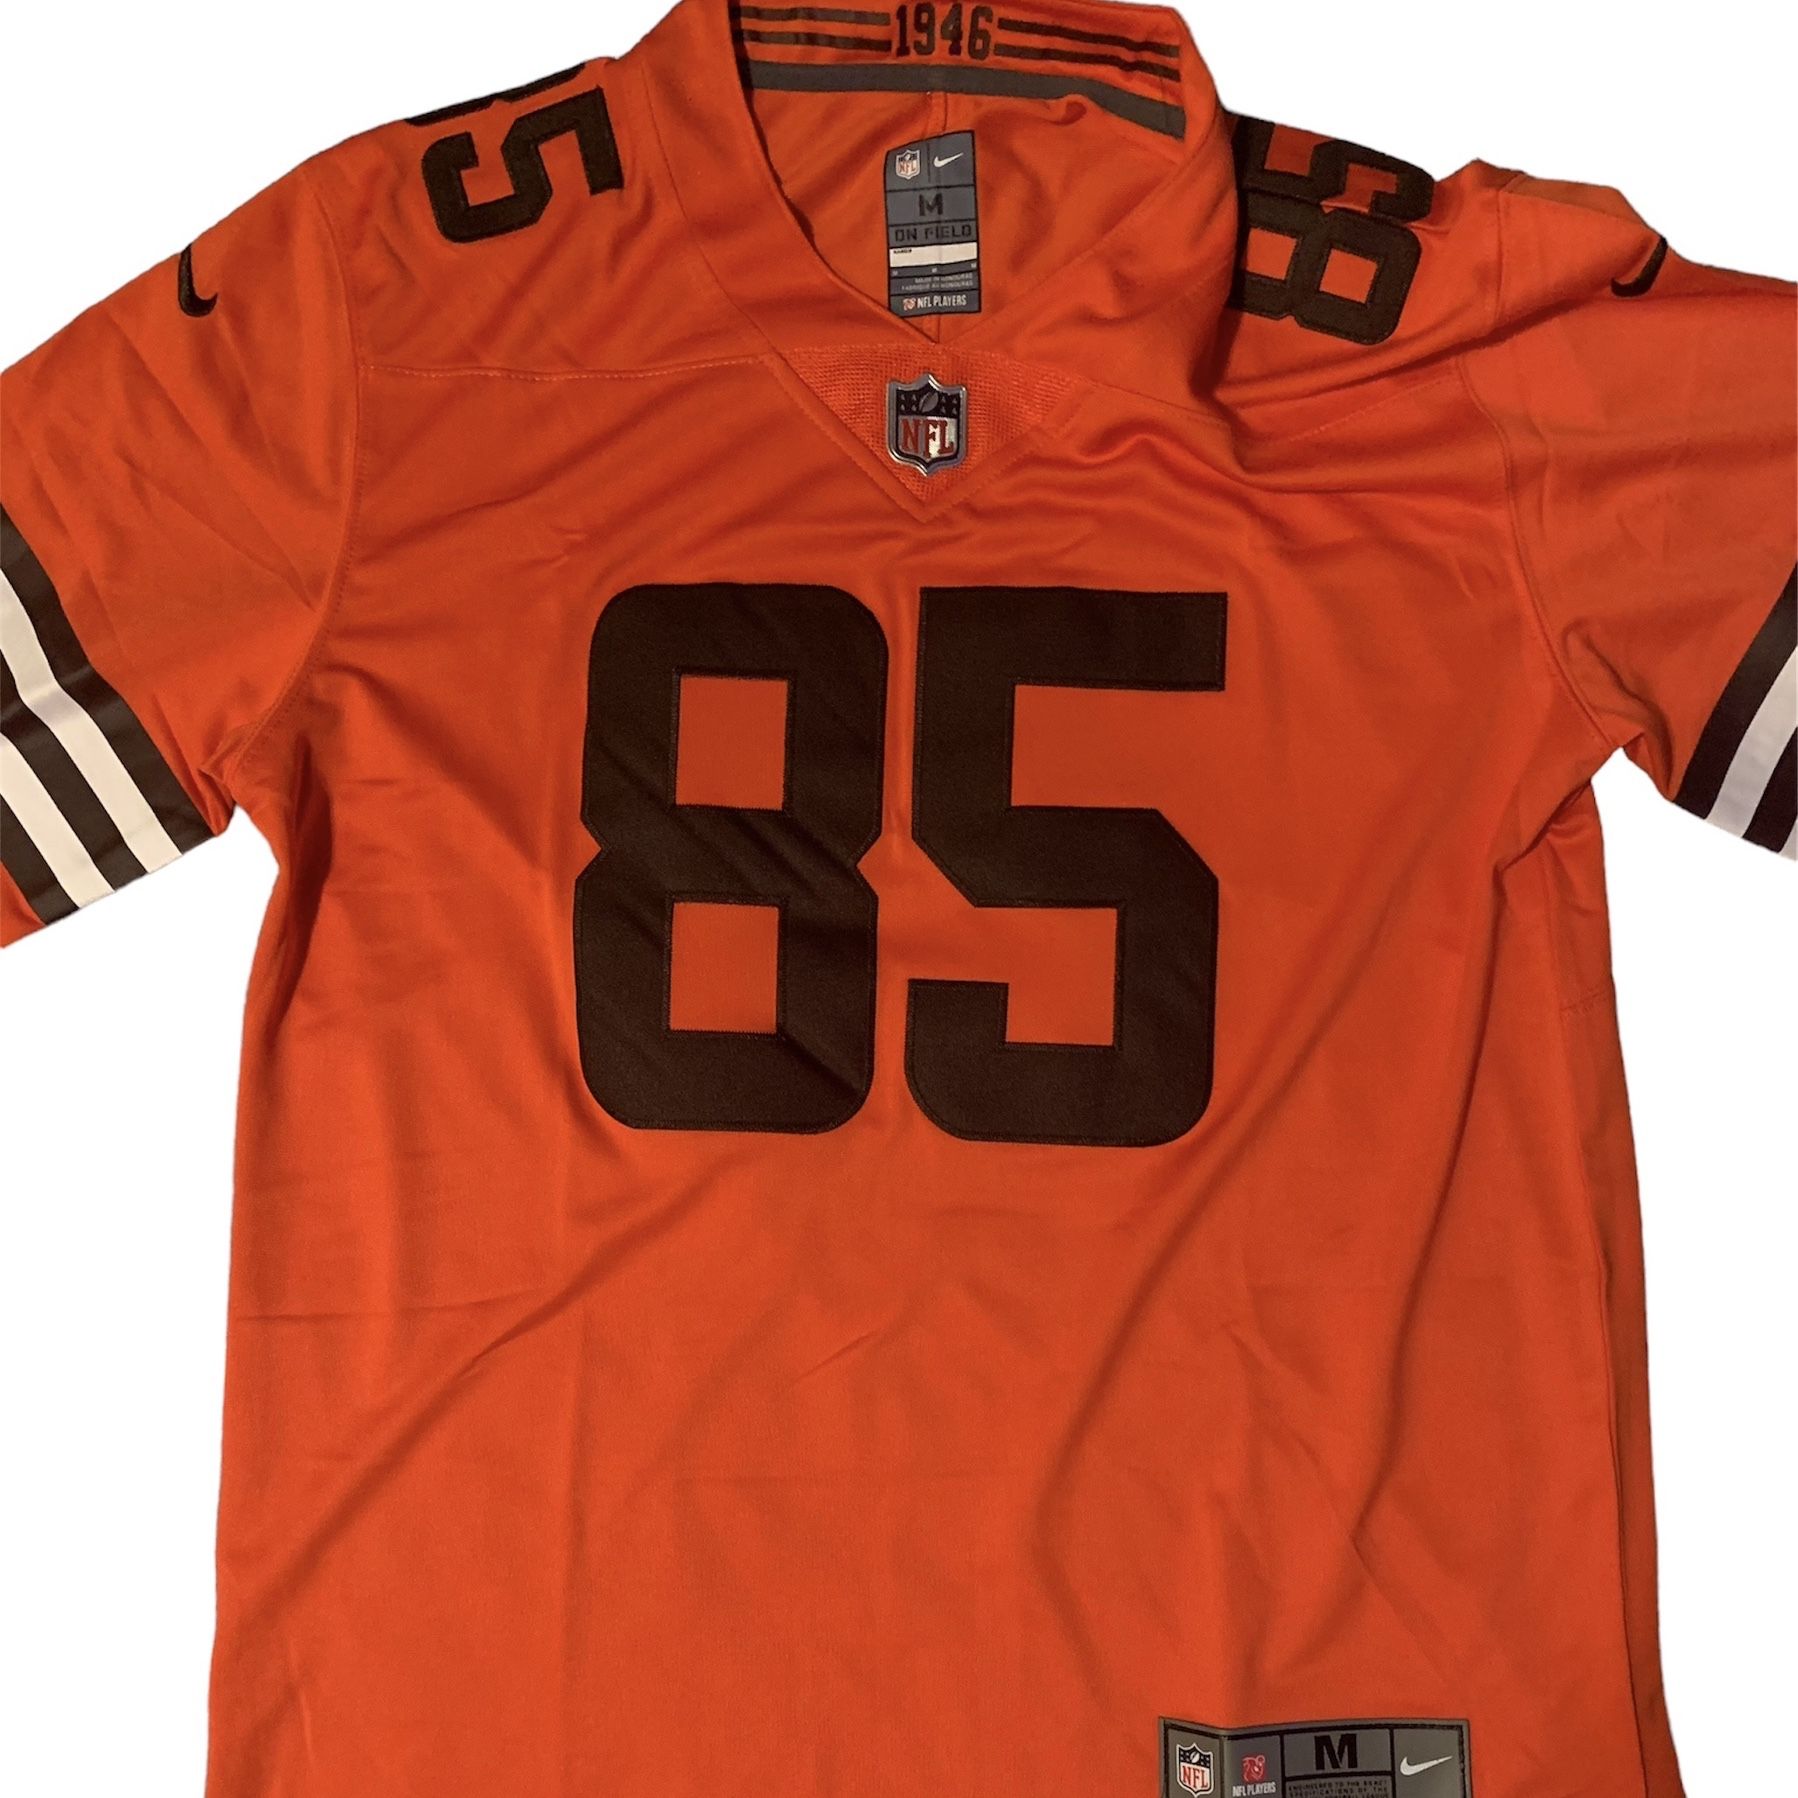 New Stitched Never Worn Cleveland Browns David Njoku Jersey Size Medium, Large, And 2XL